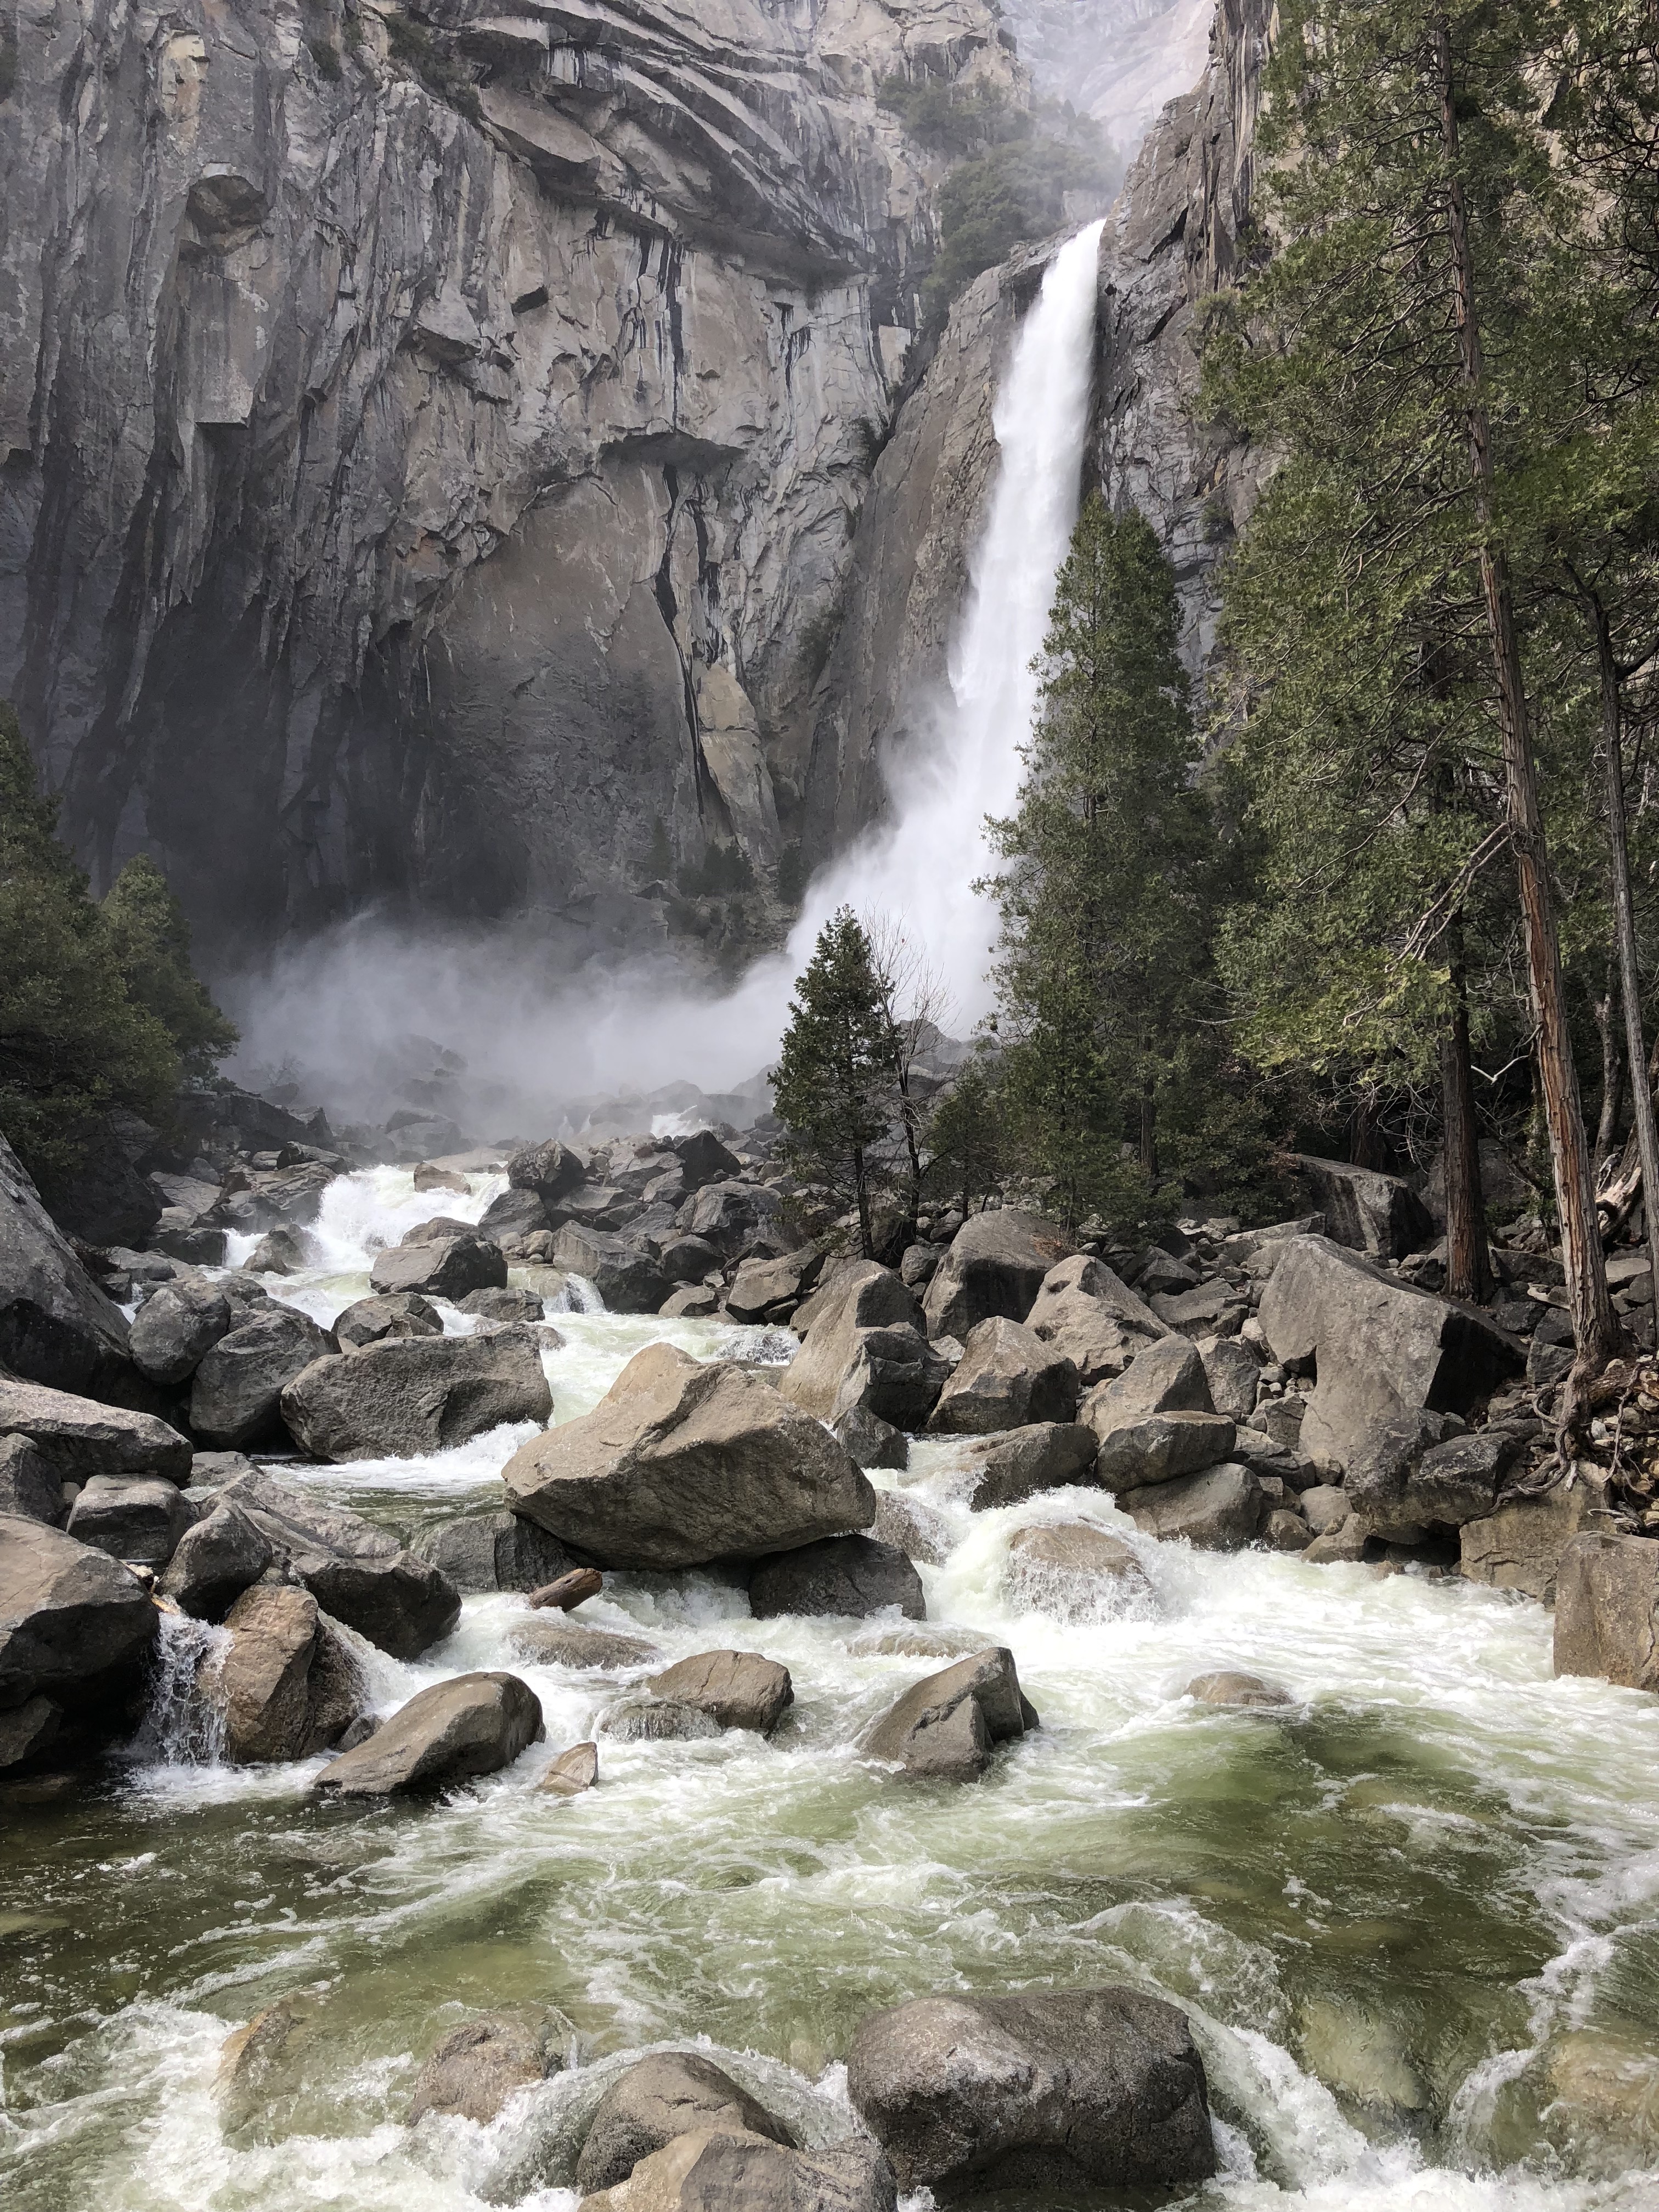 the water below Nevada Fall in Yosemite National Park